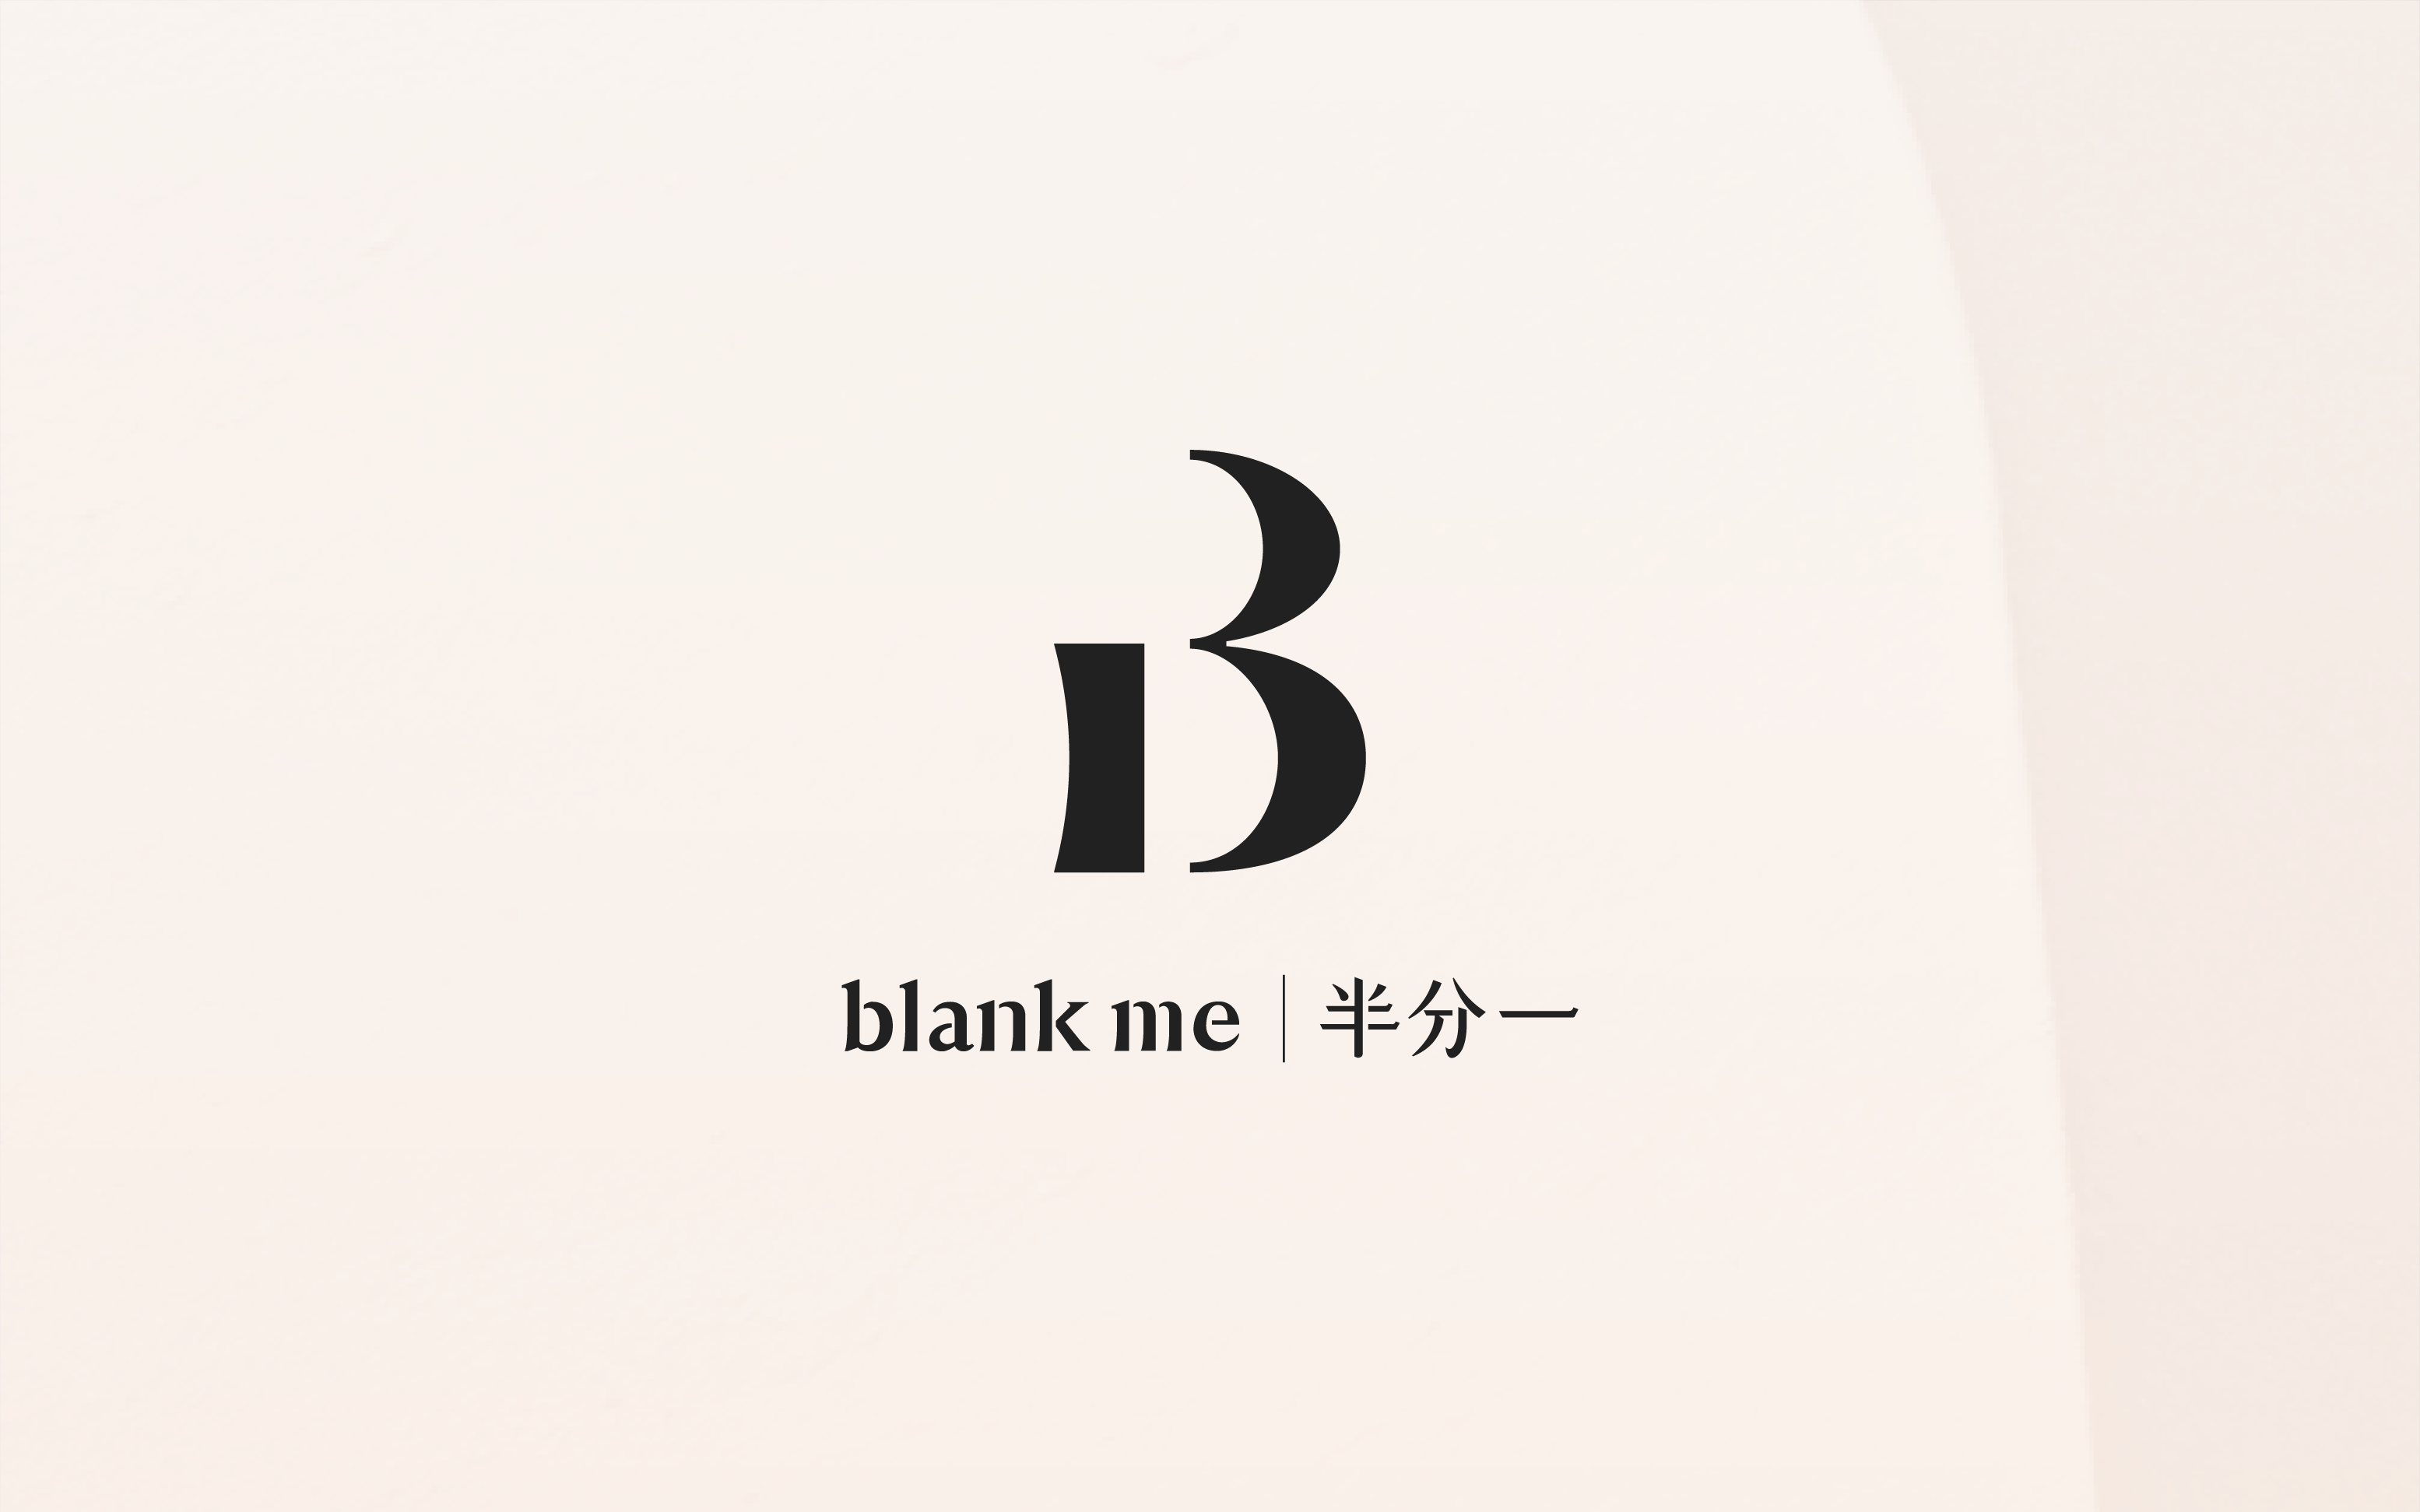 blank me发布全新中文名「半分一」